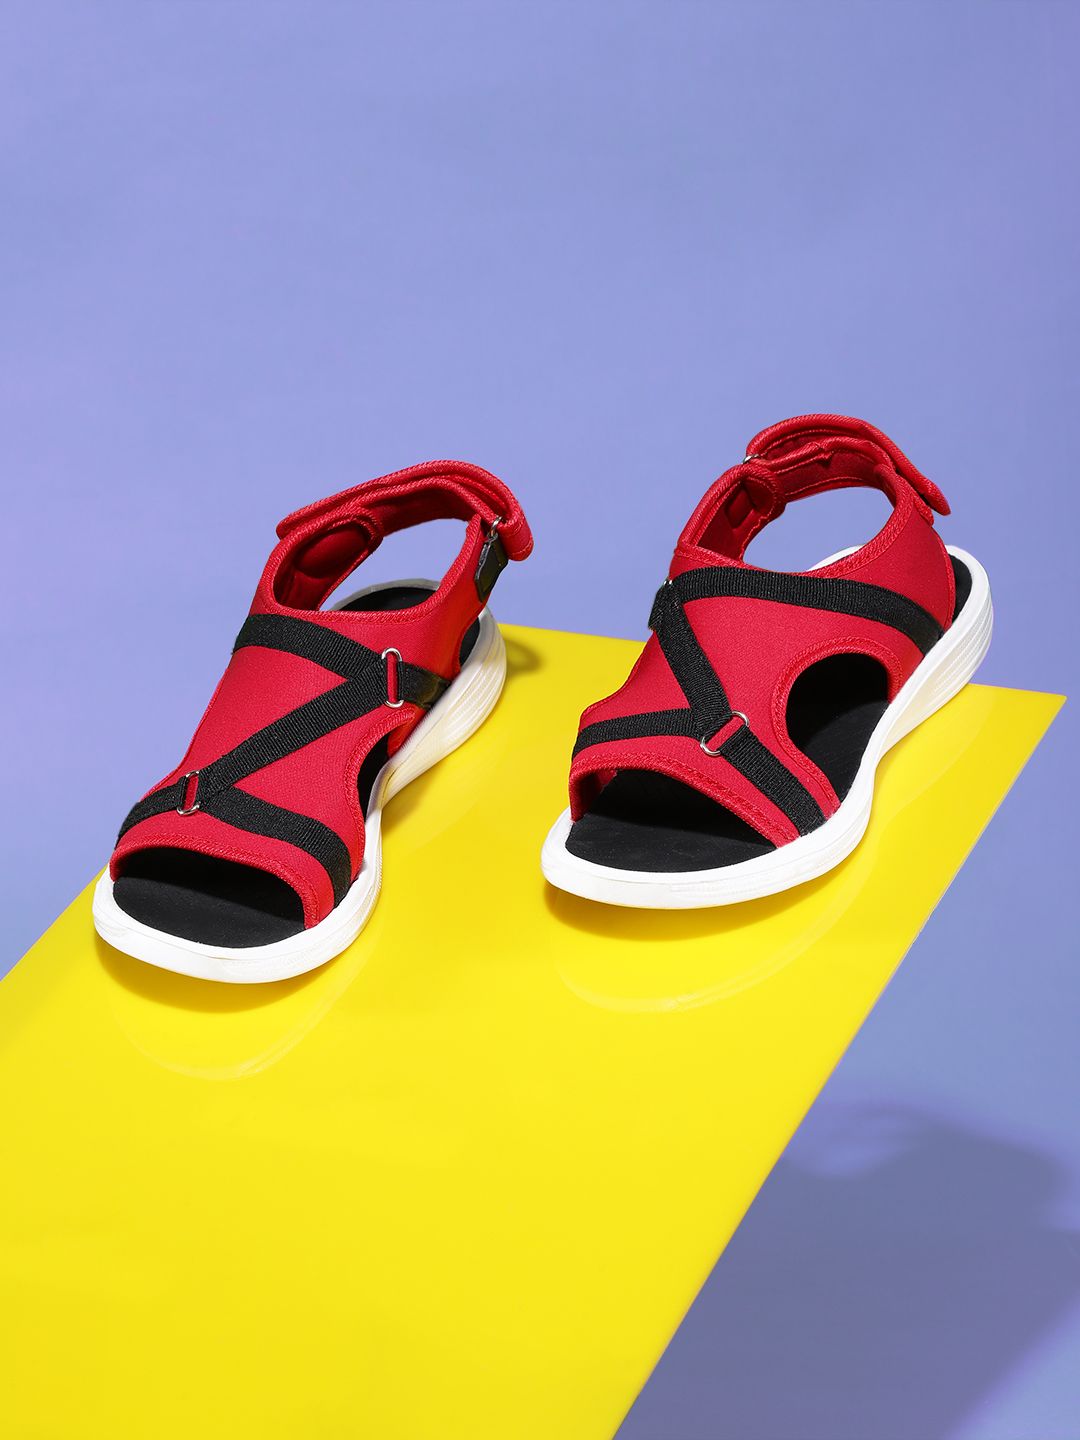 Kook N Keech Women Red & Black Solid Sports Sandals Price in India